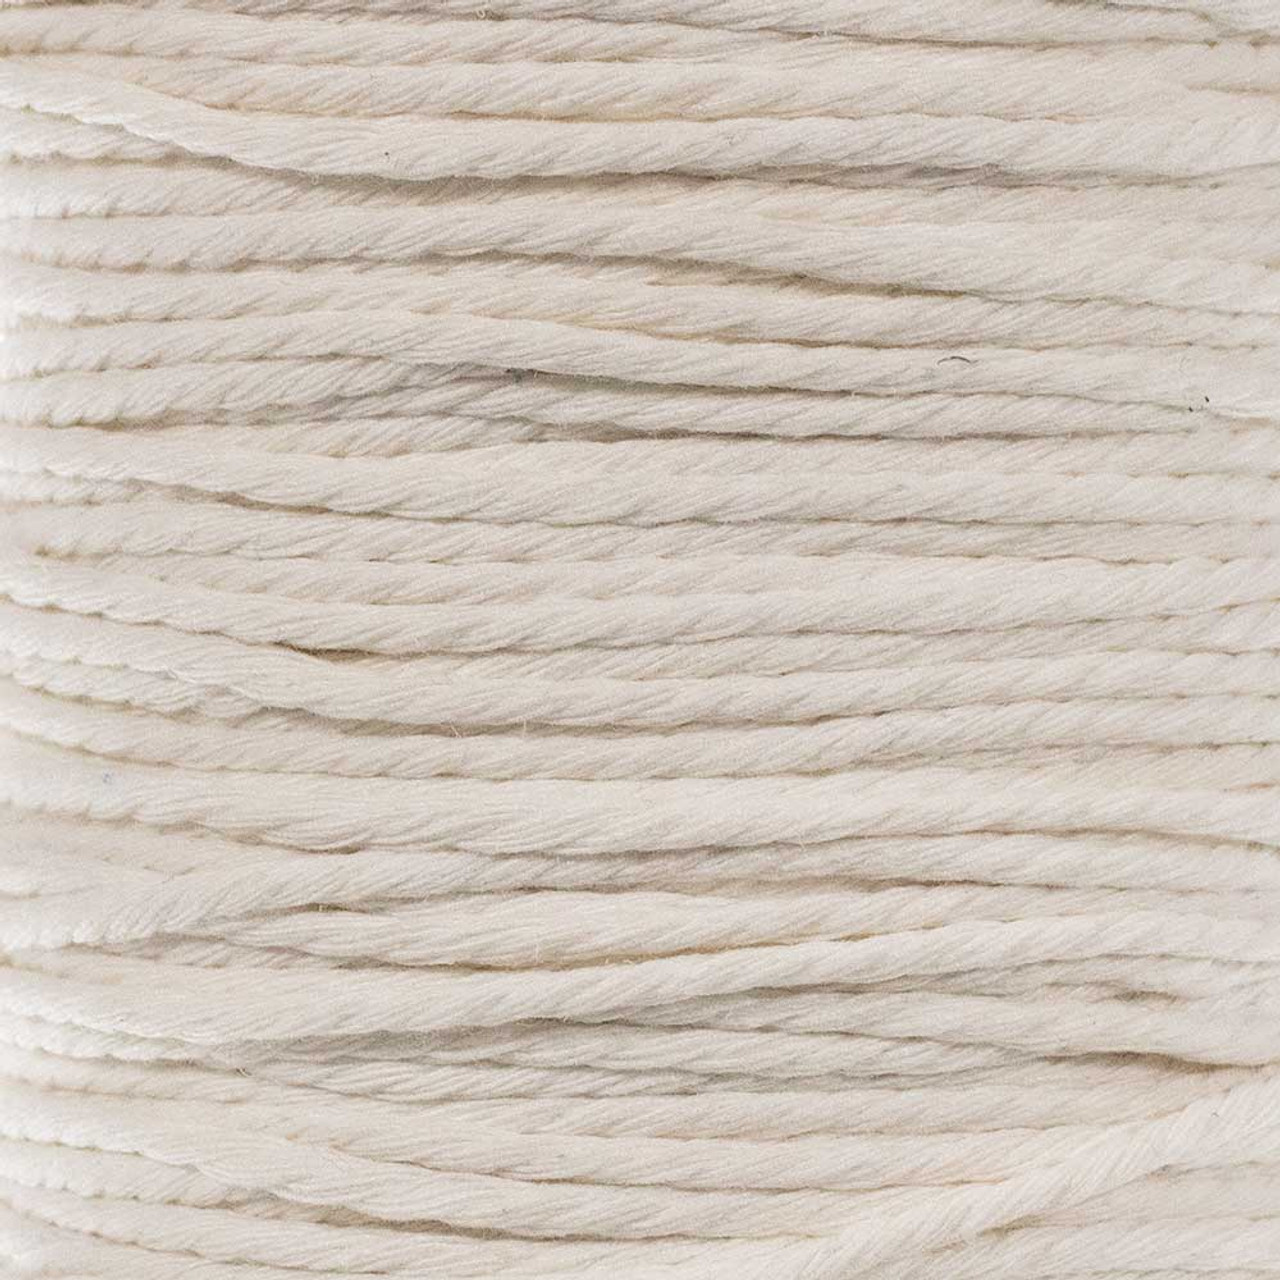 Basic - 3 mm Cotton String Natural